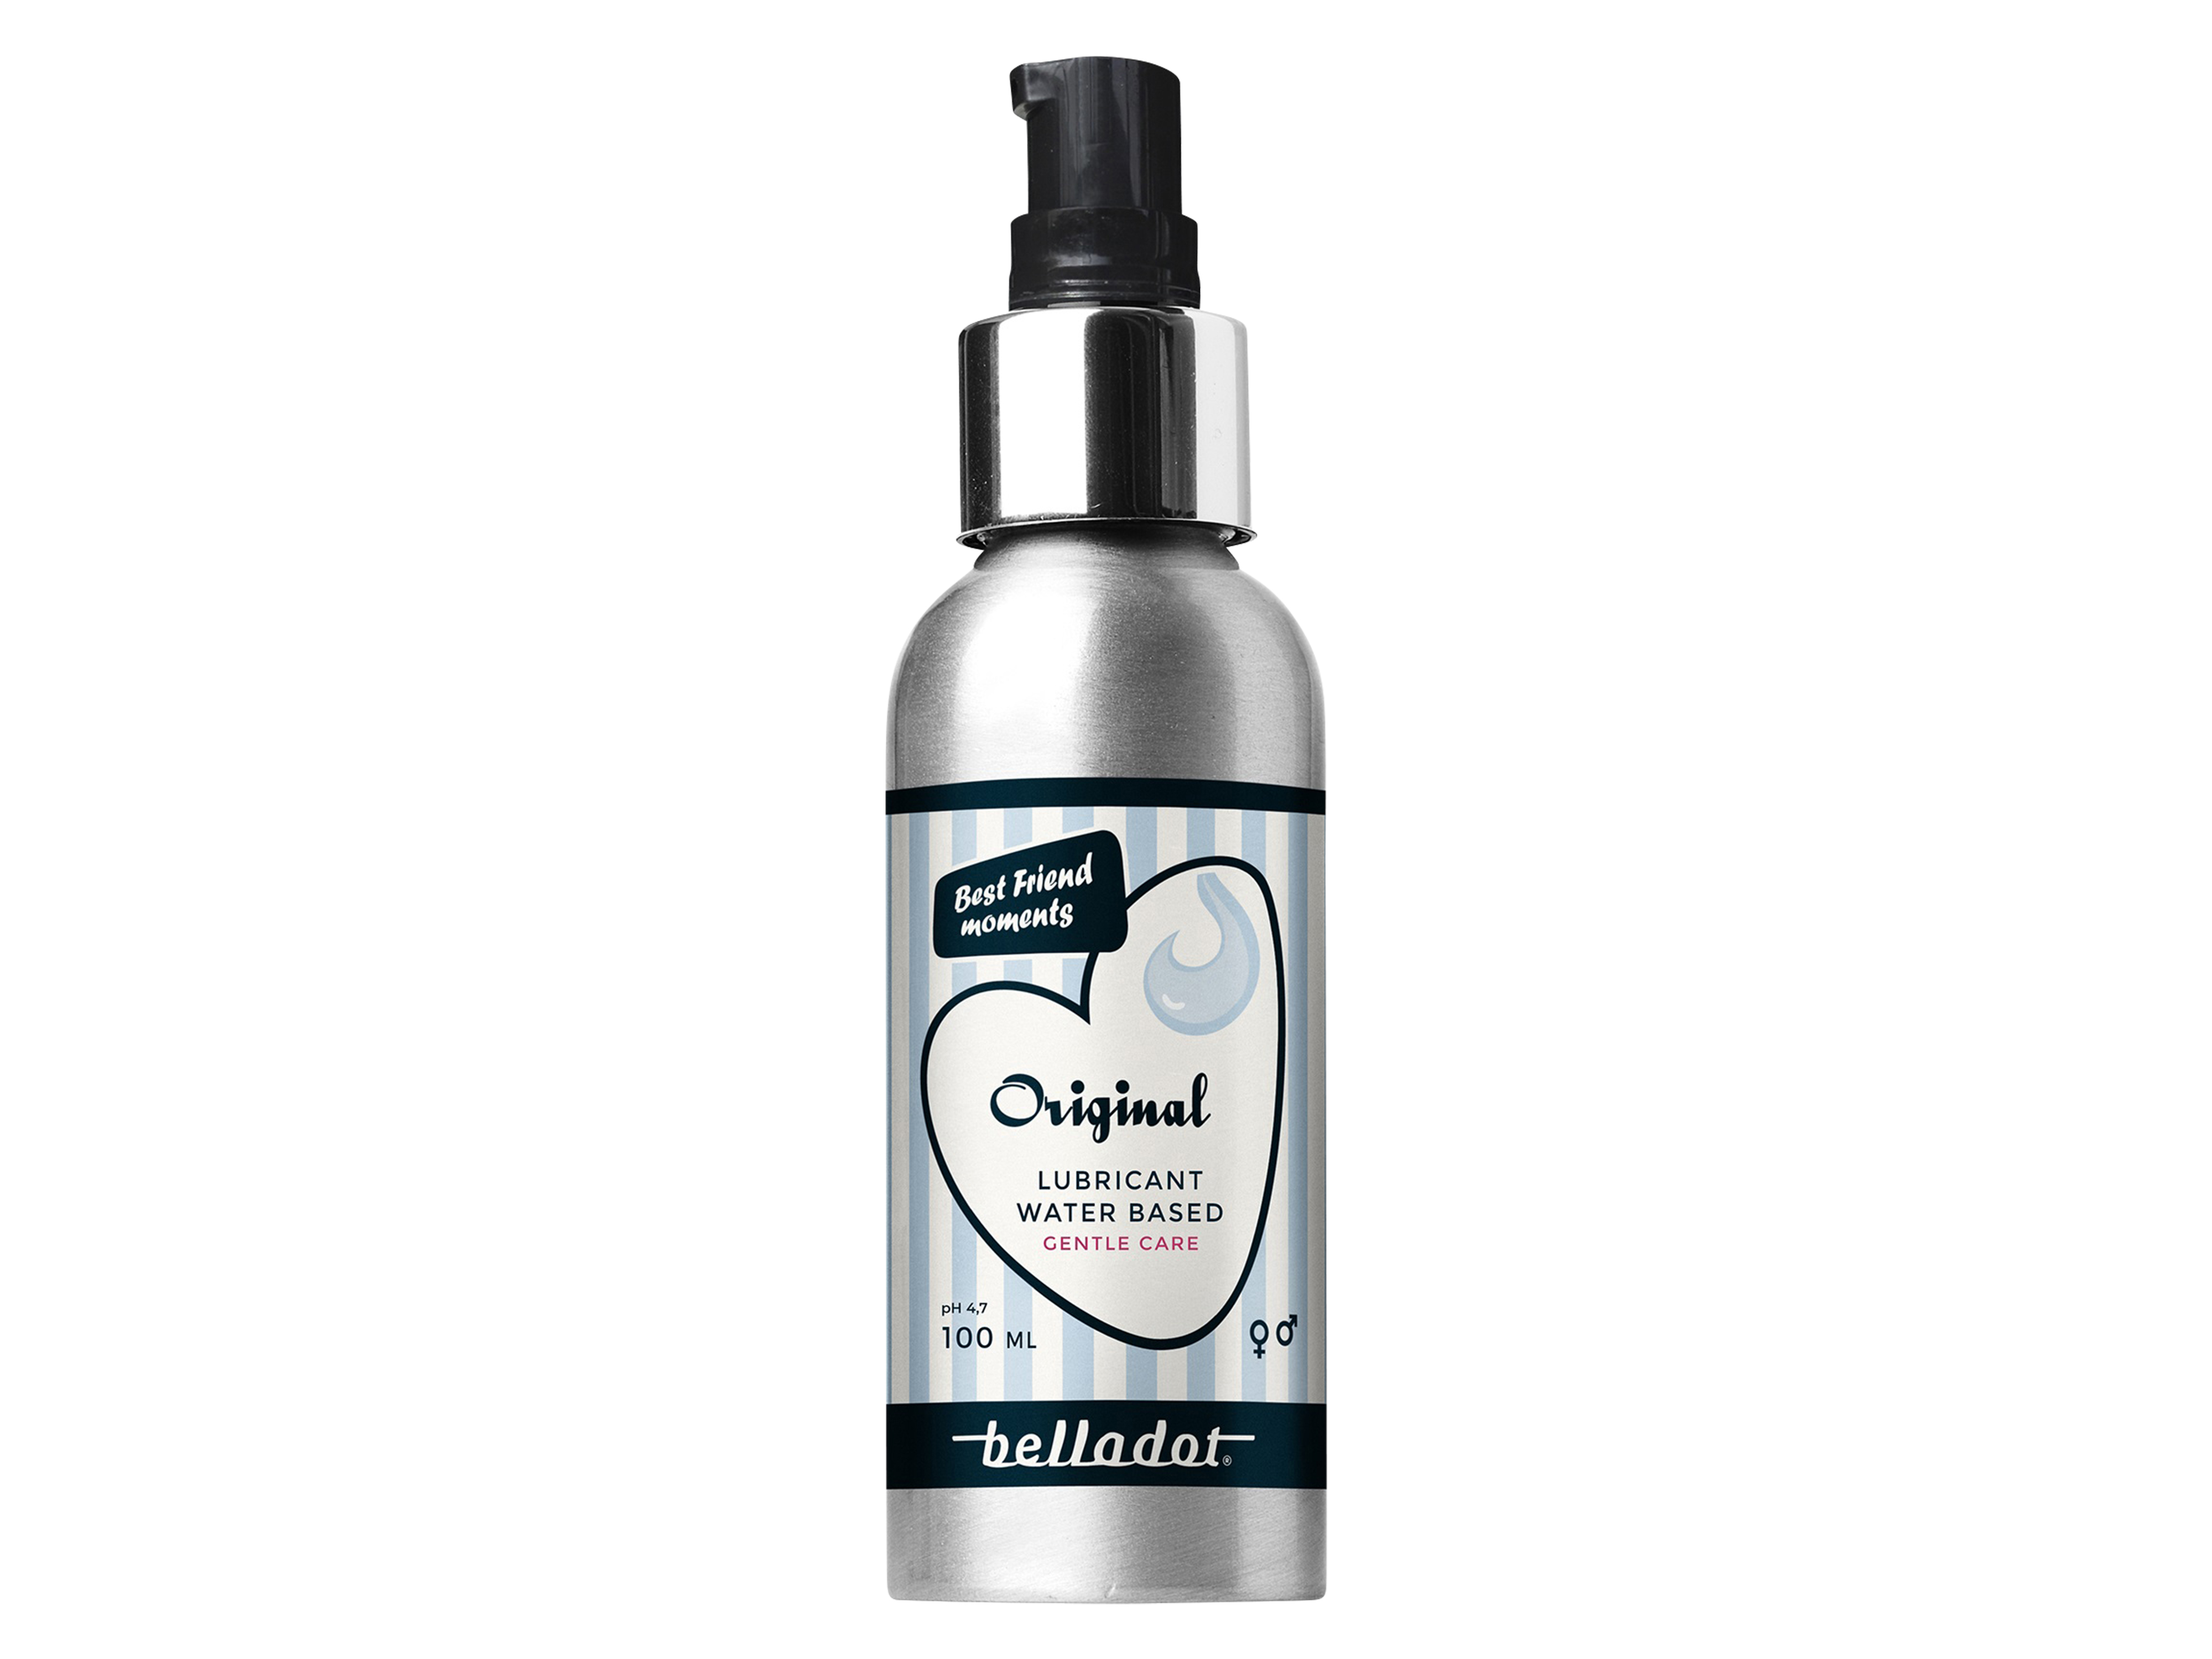 Belladot Original Lubricant Water Based, 100 ml